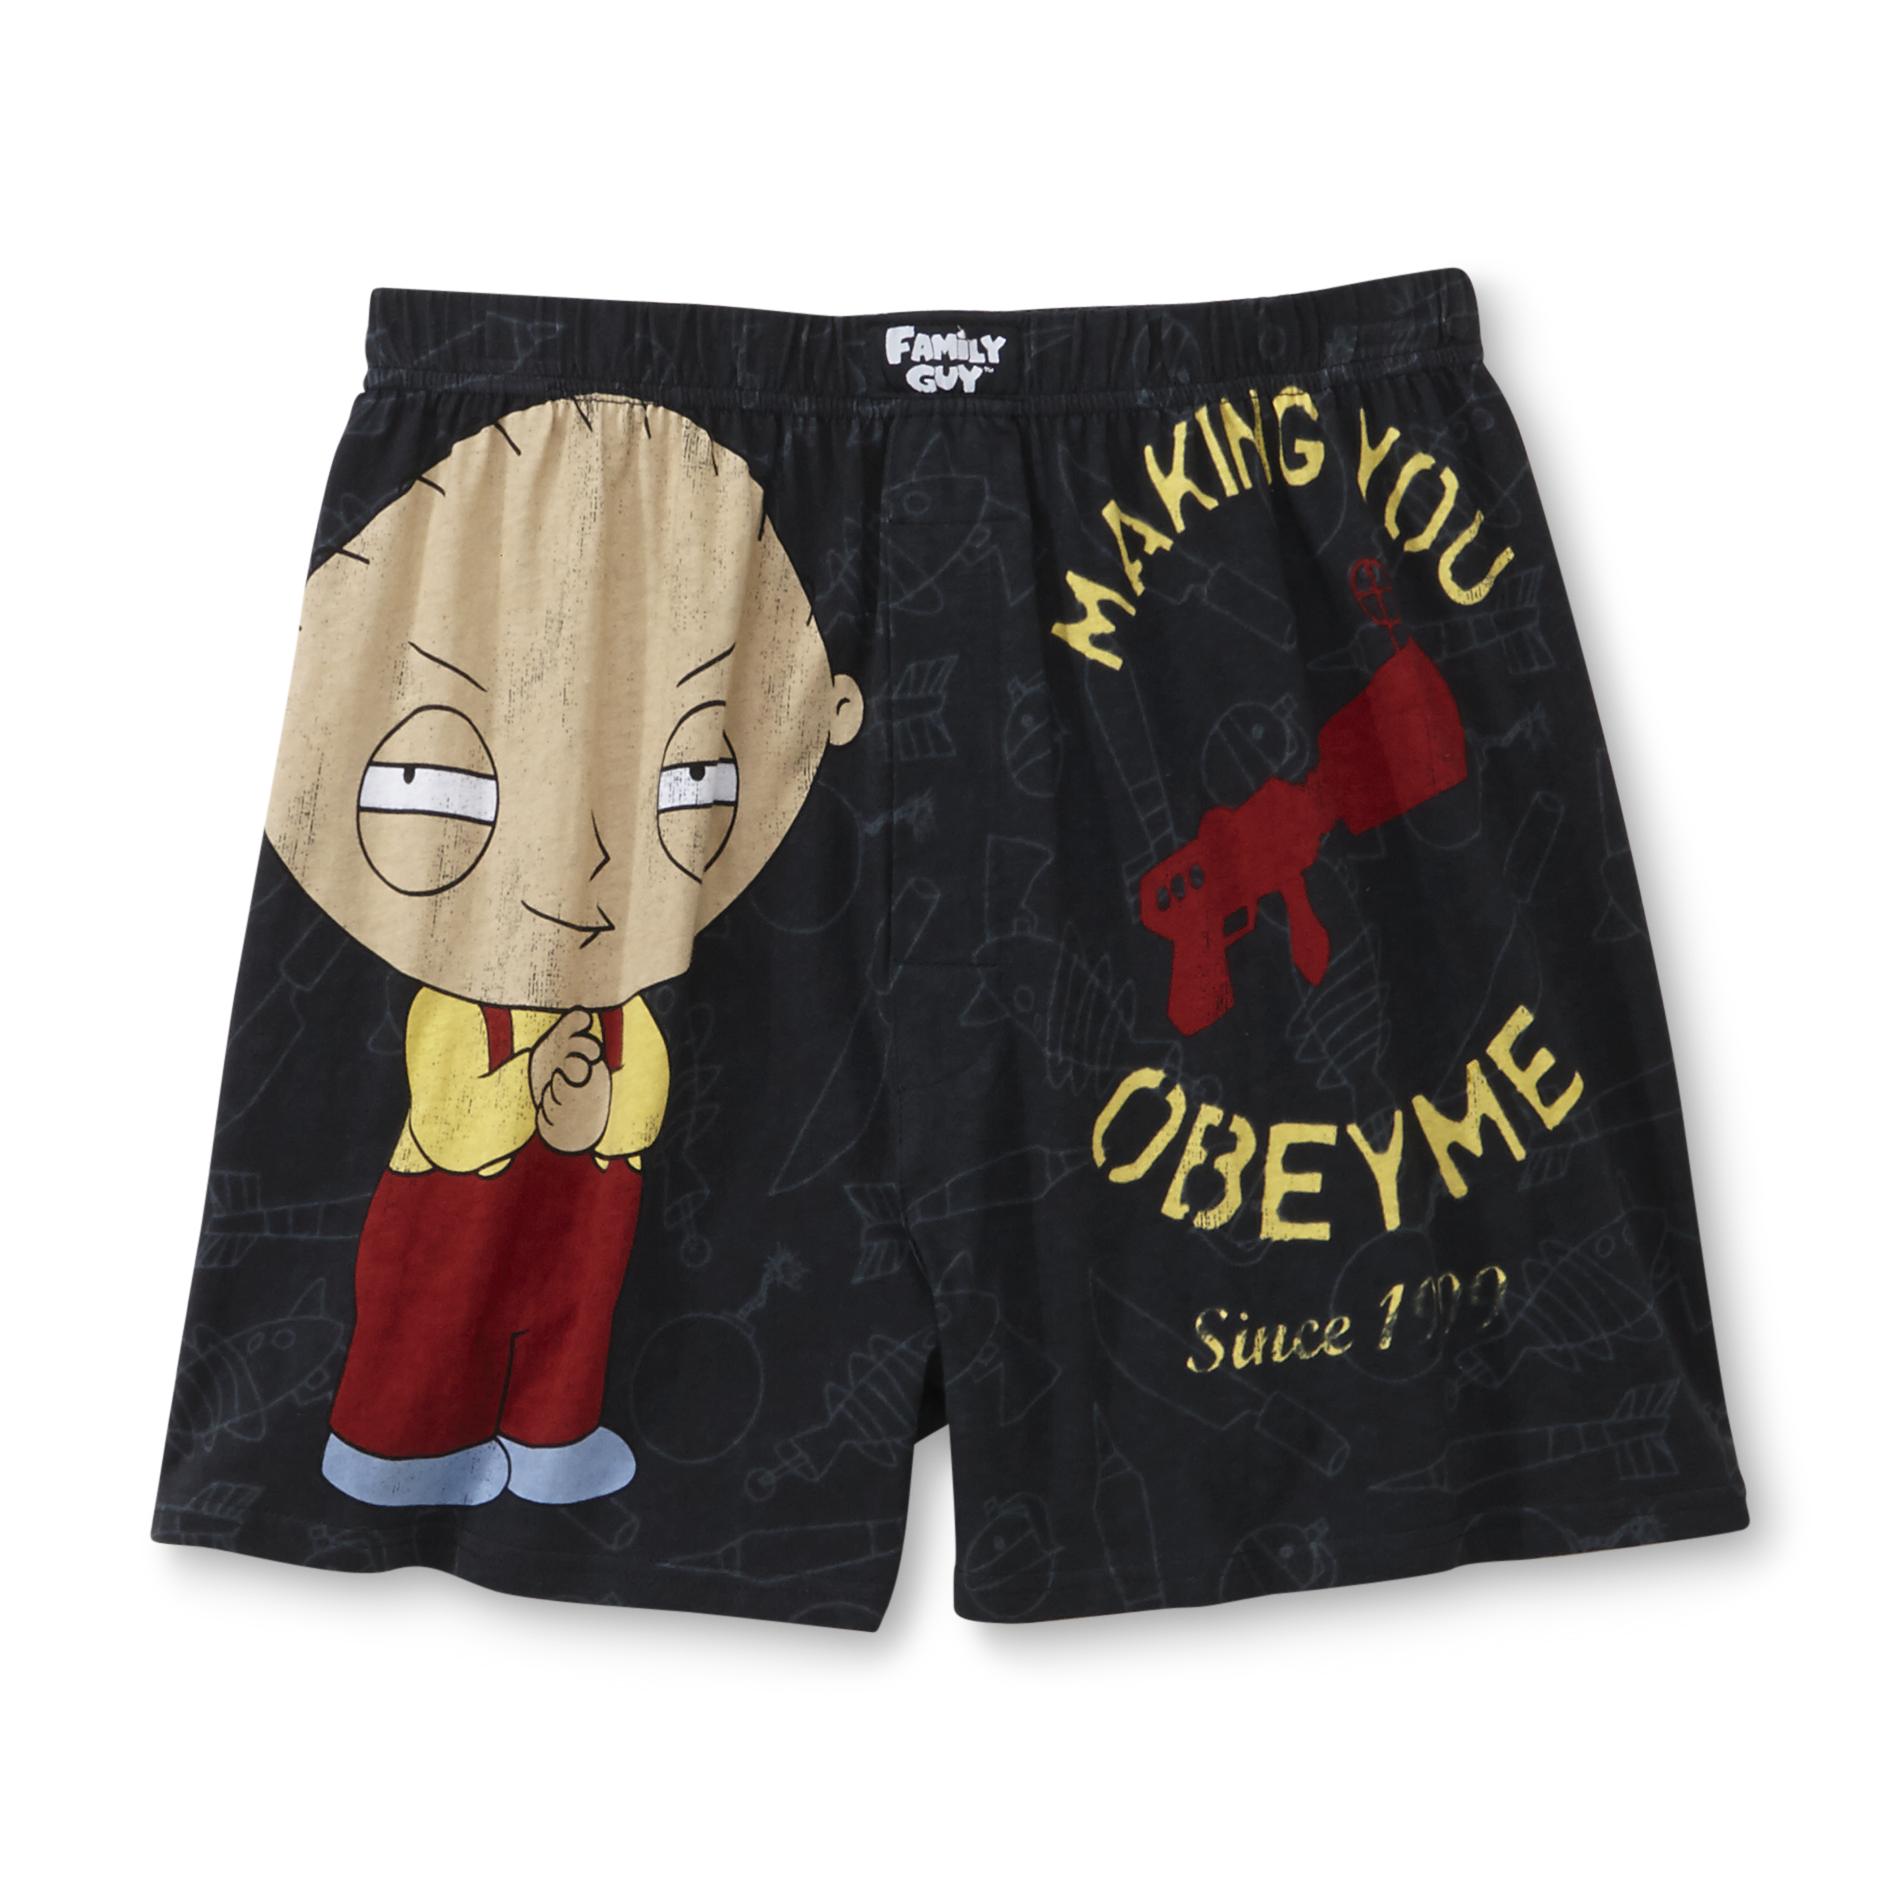 Joe Boxer Men's Boxer Shorts - Family Guy